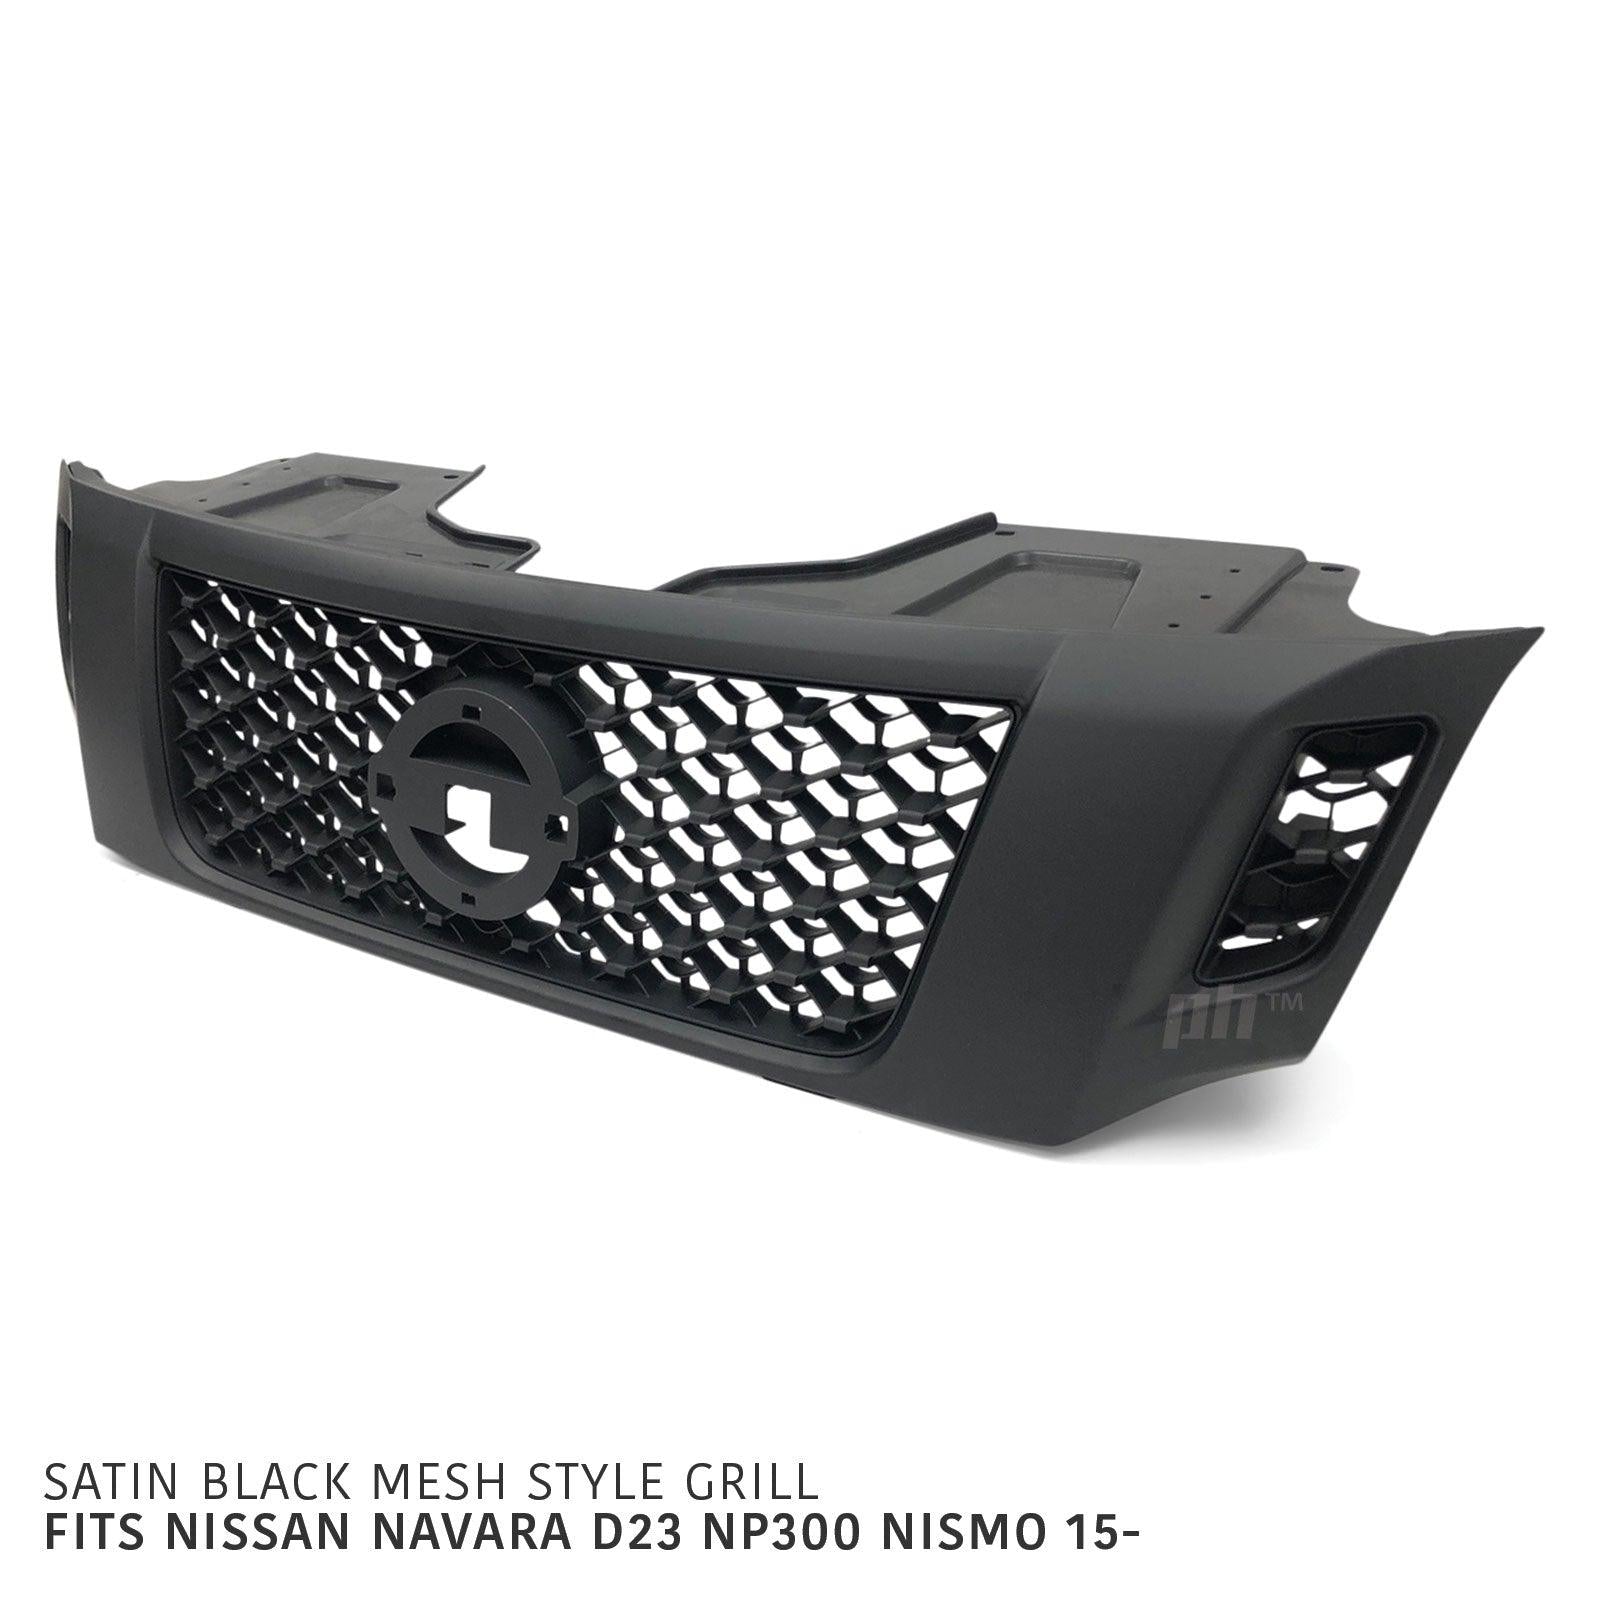 Grill Satin Black Edition Mesh Stye Fits Nissan Navara D23 NP300 Nismo 2015-2020 - 4X4OC™